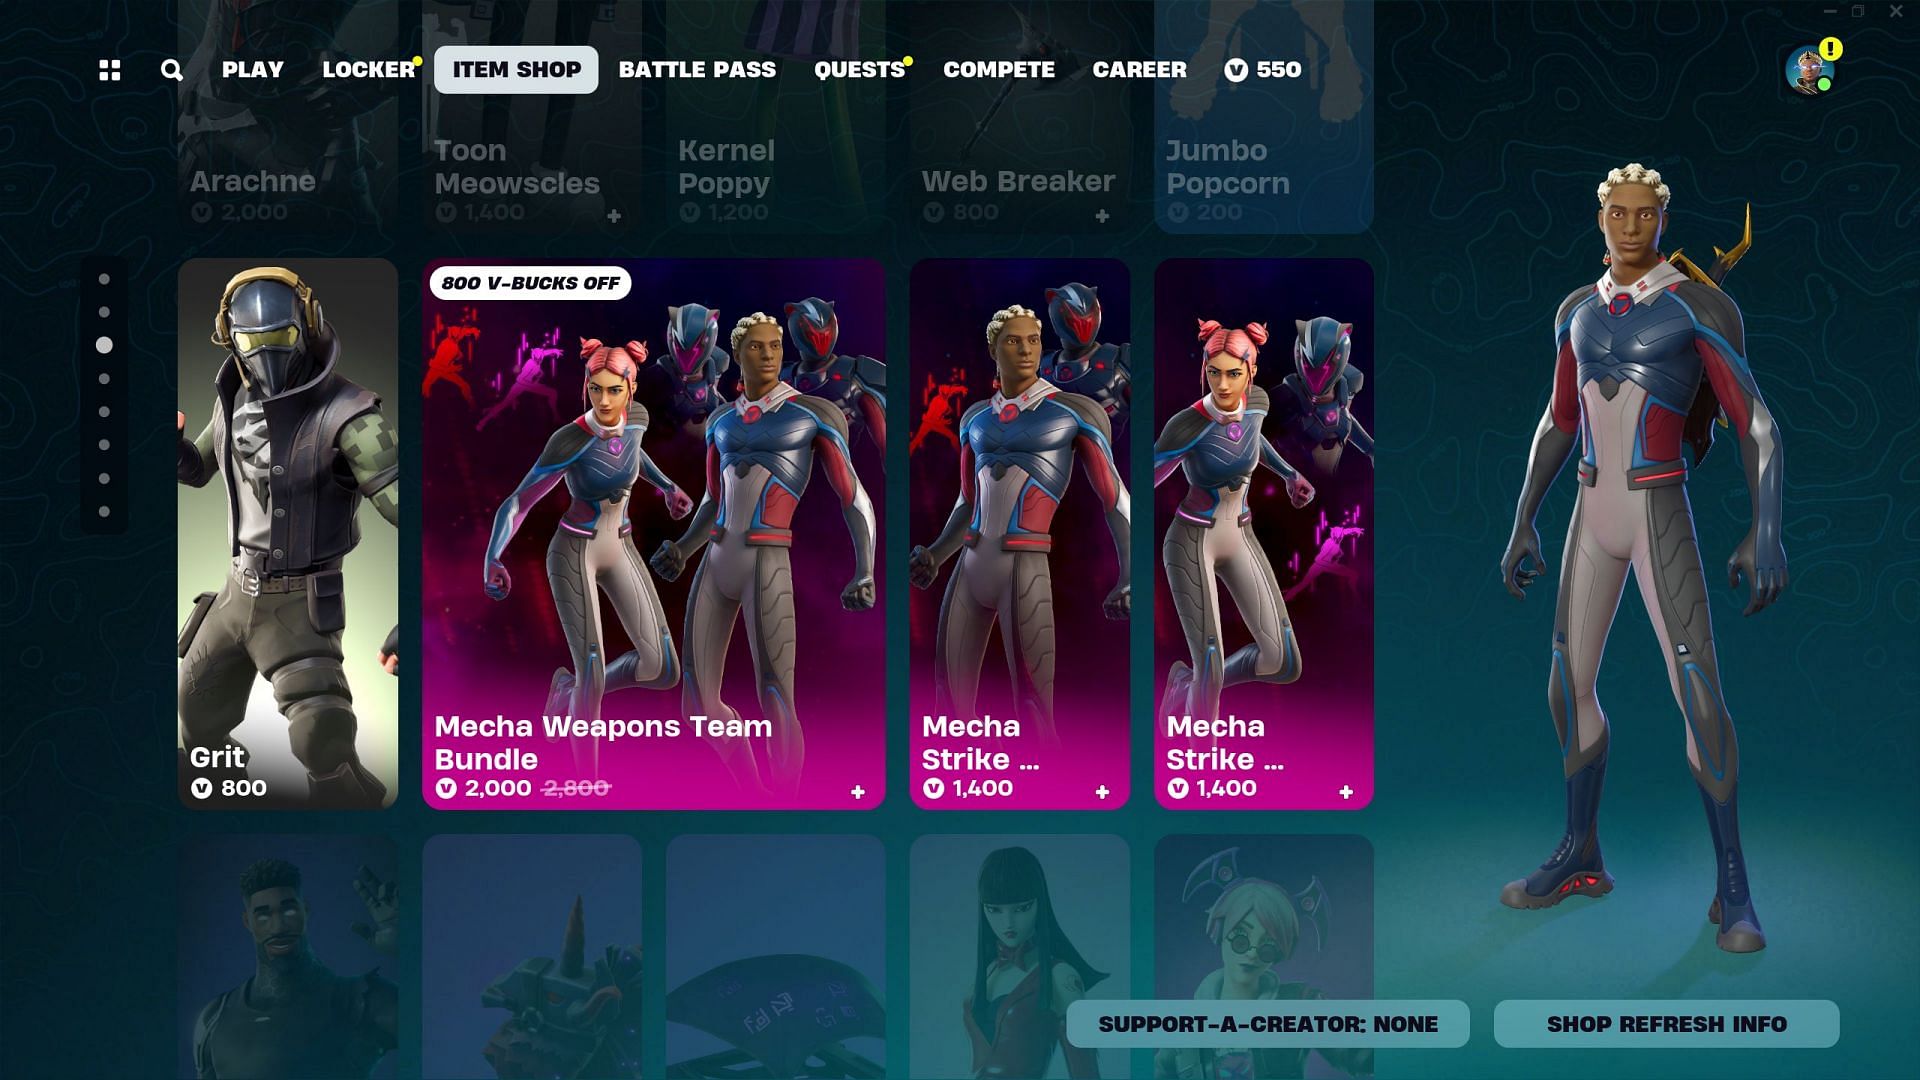 Mecha Strike Navigator and Mecha Strike Defender Skins are currently listed in the Item Shop (Image via Epic Games/Fortnite)